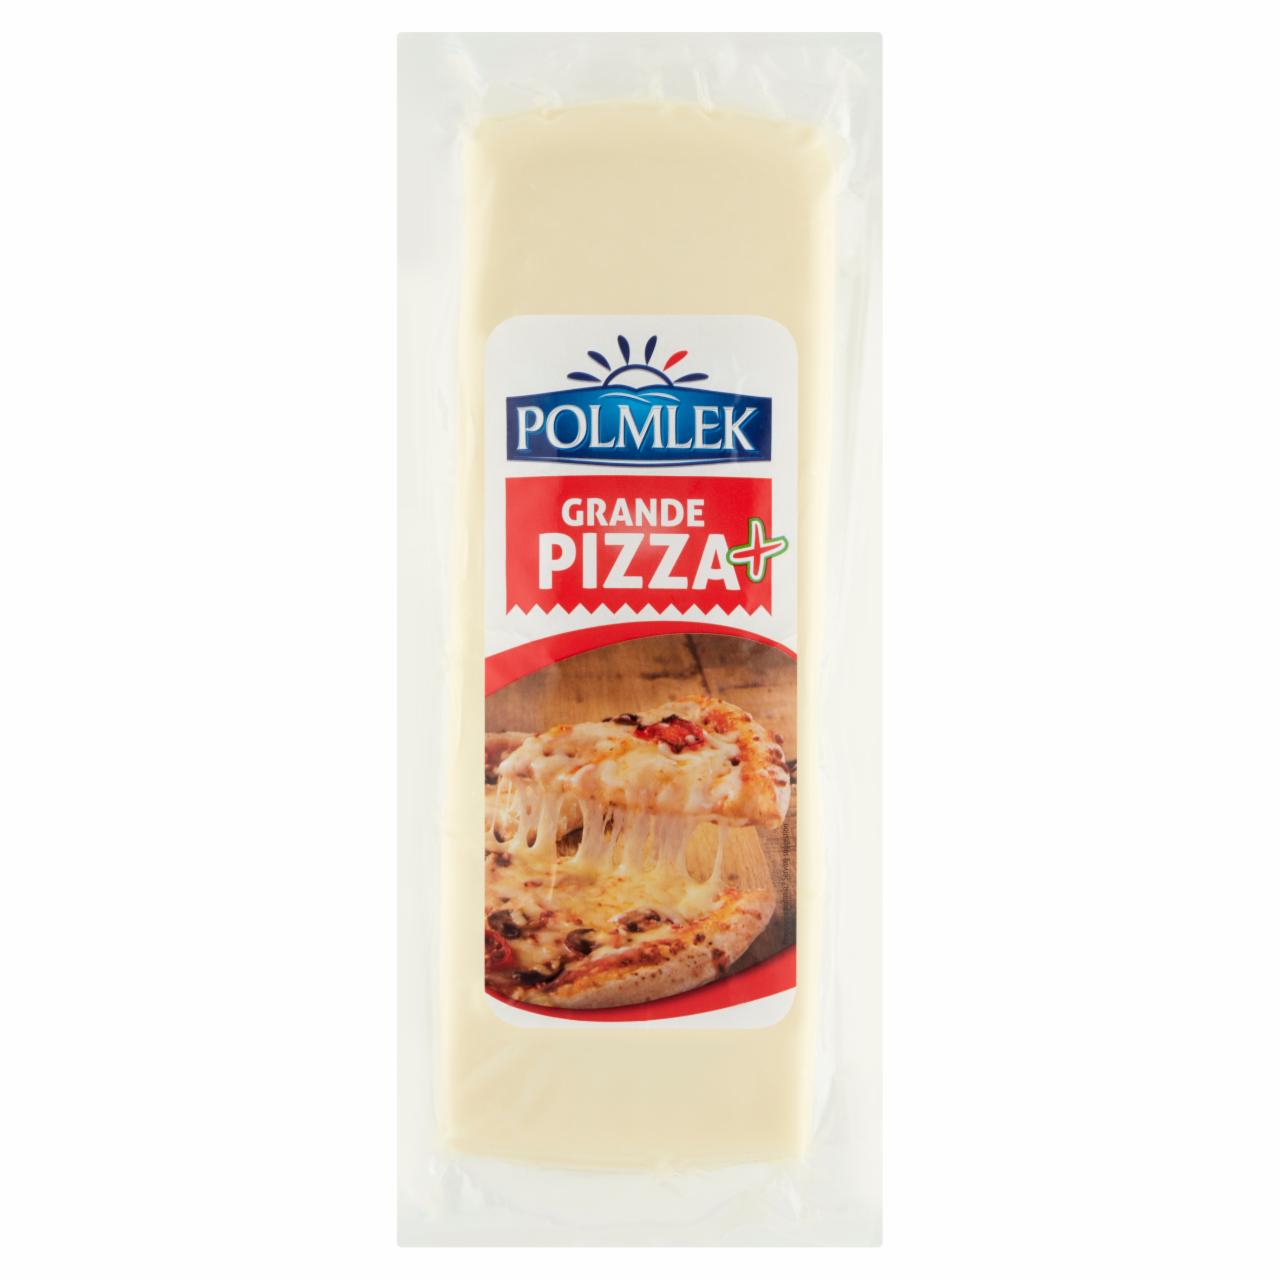 Zdjęcia - Polmlek Grande pizza plus Produkt seropodobny